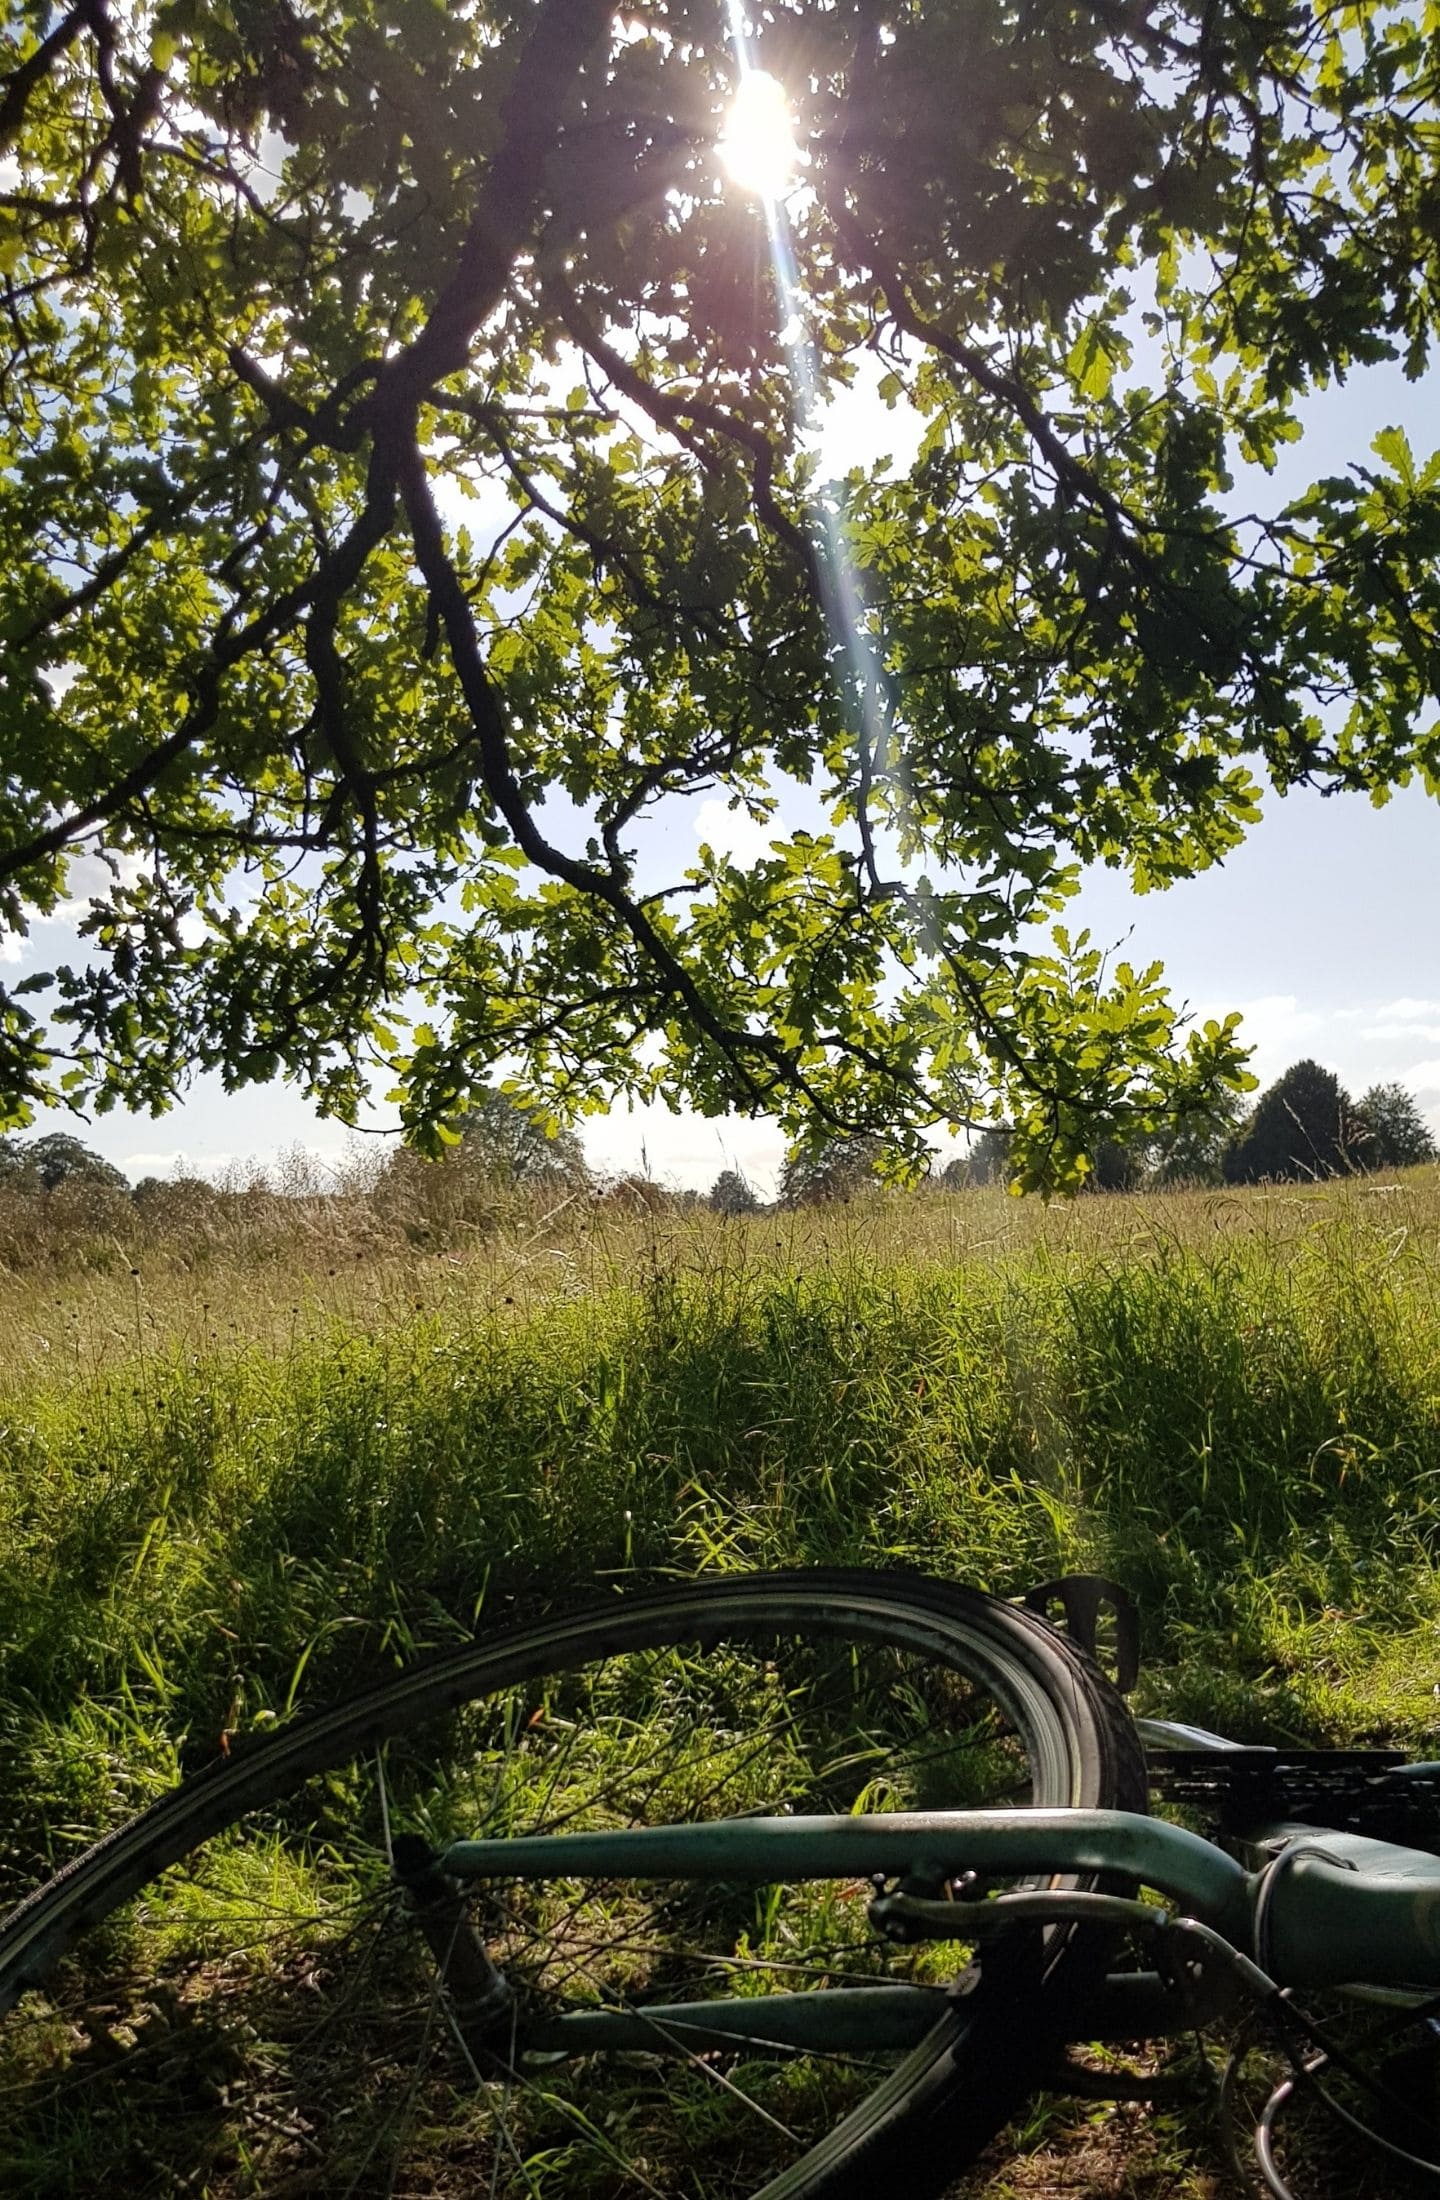 Bike by a tree with sun shining through